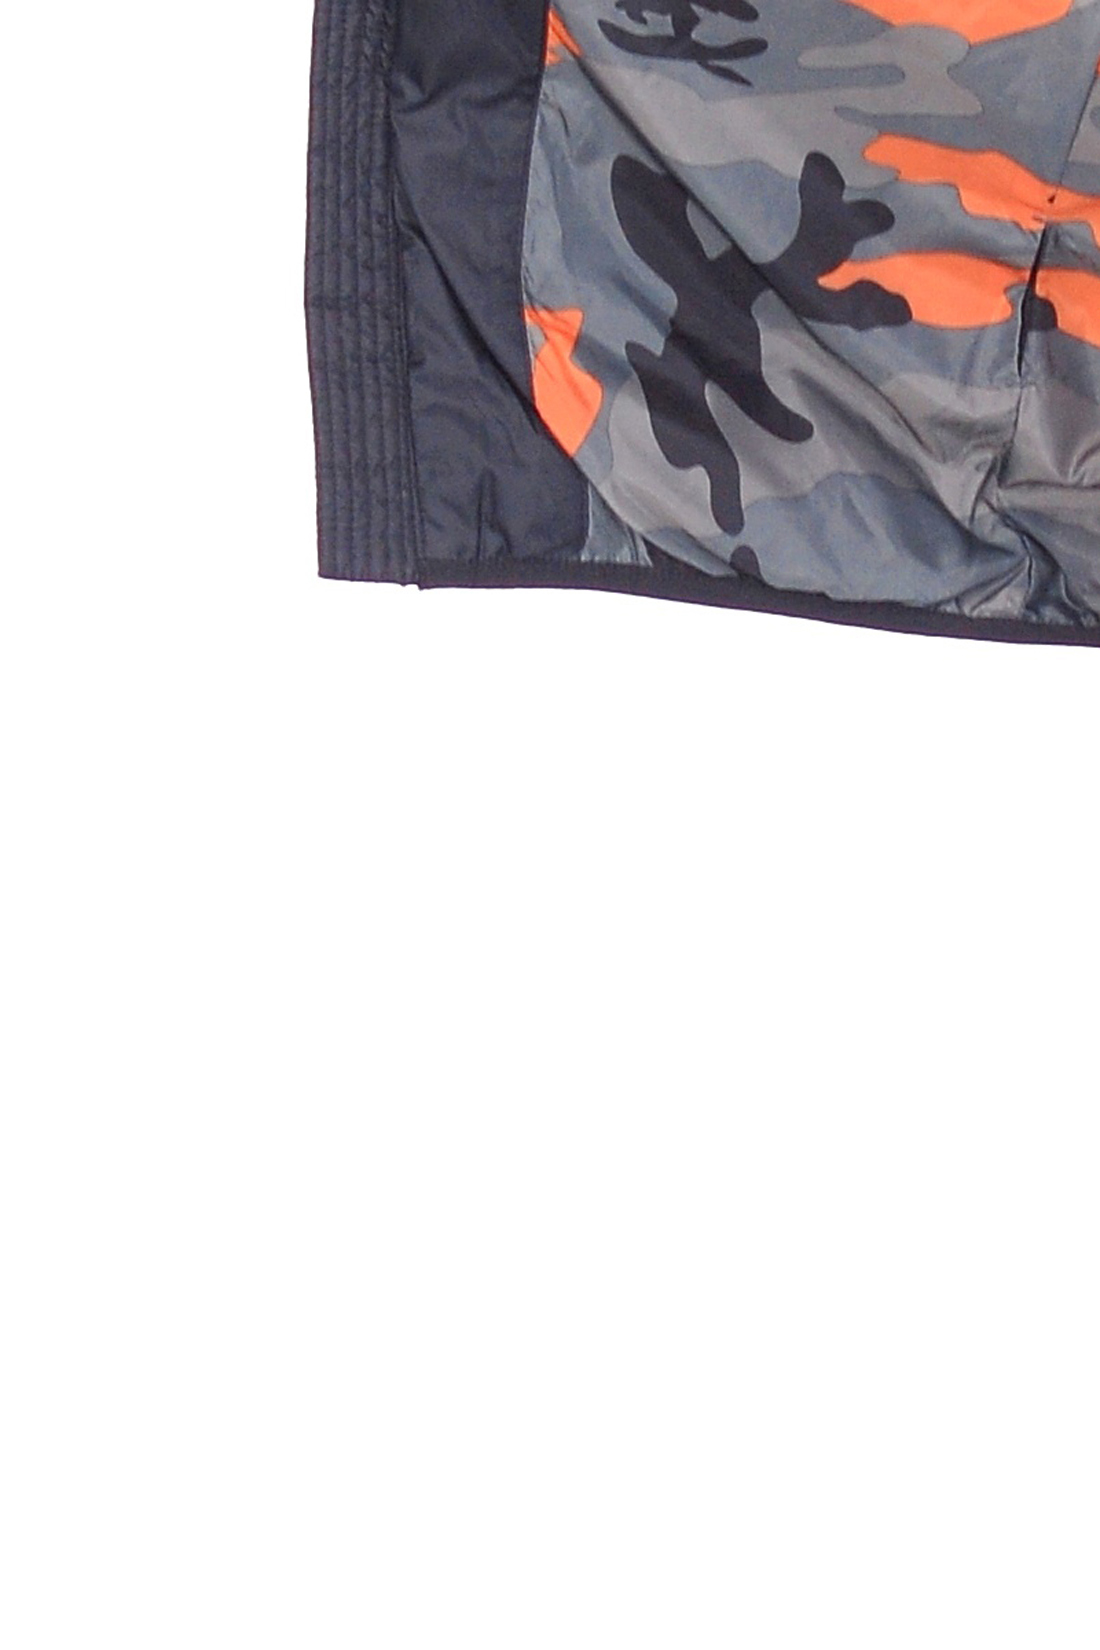 Лёгкий пуховик с яркой подкладкой (арт. baon B519501), размер 3XL, цвет черный Лёгкий пуховик с яркой подкладкой (арт. baon B519501) - фото 4